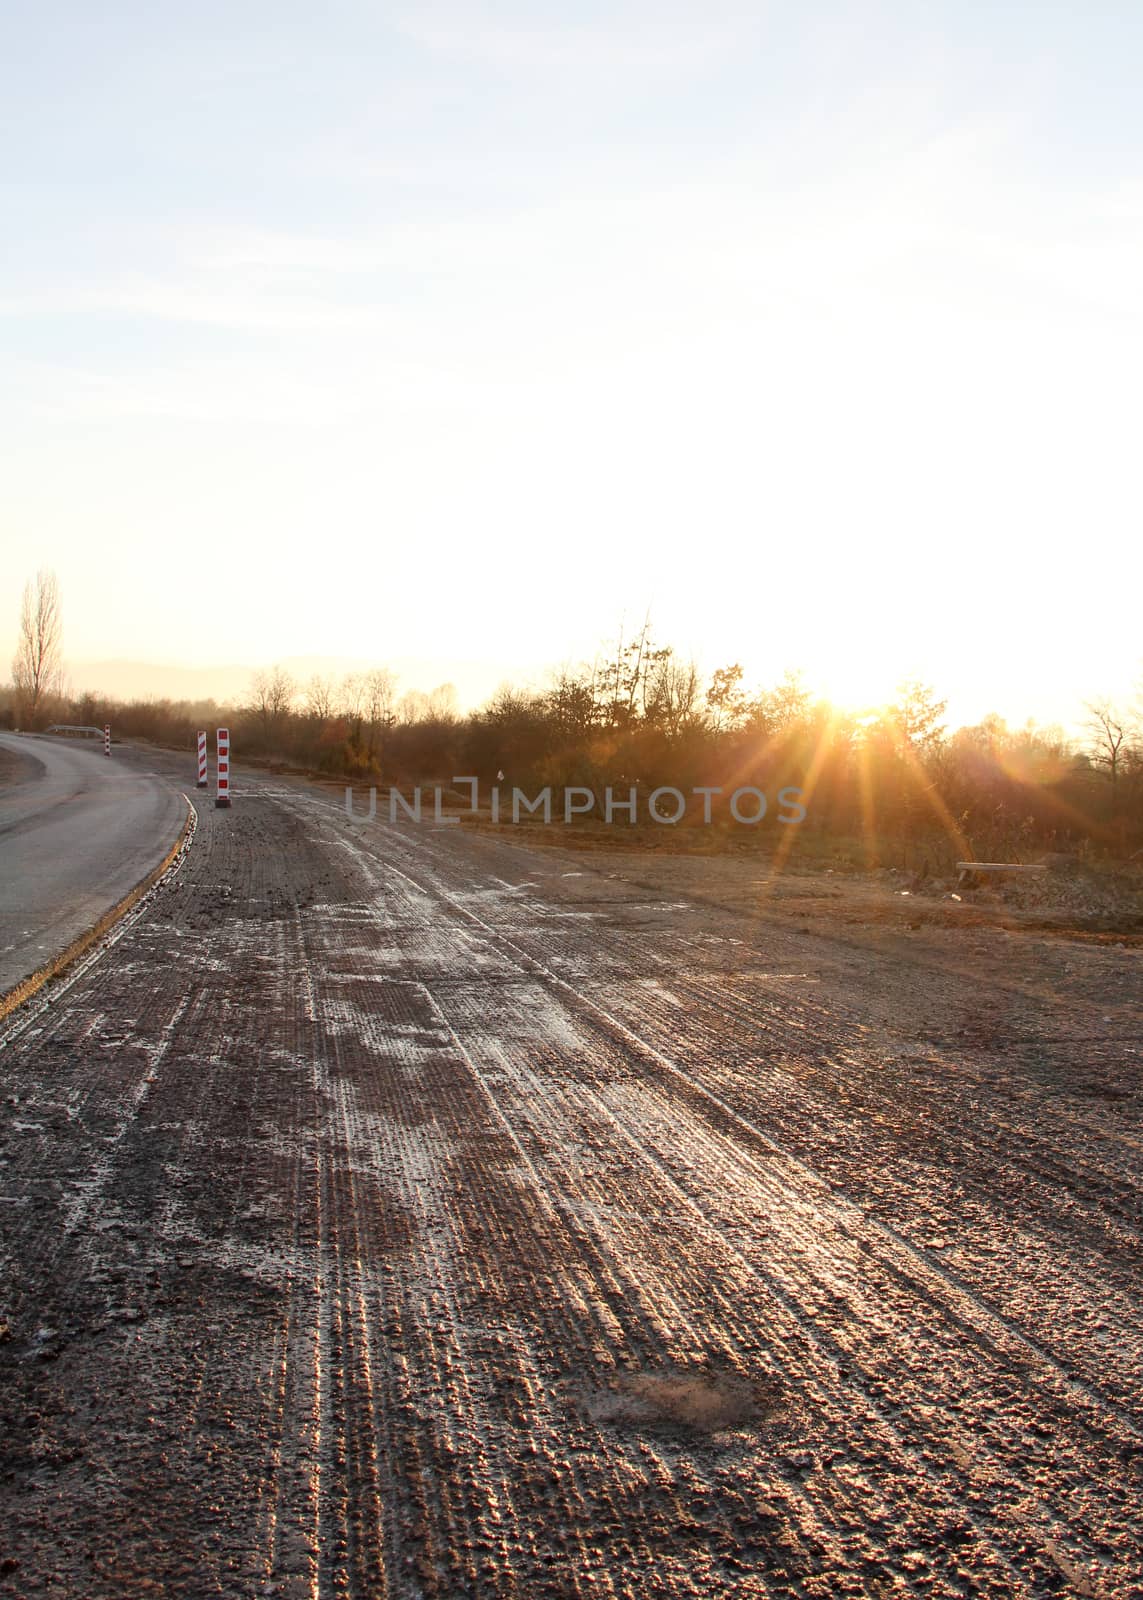 pixture of a repairing asphalt on old road on sunset